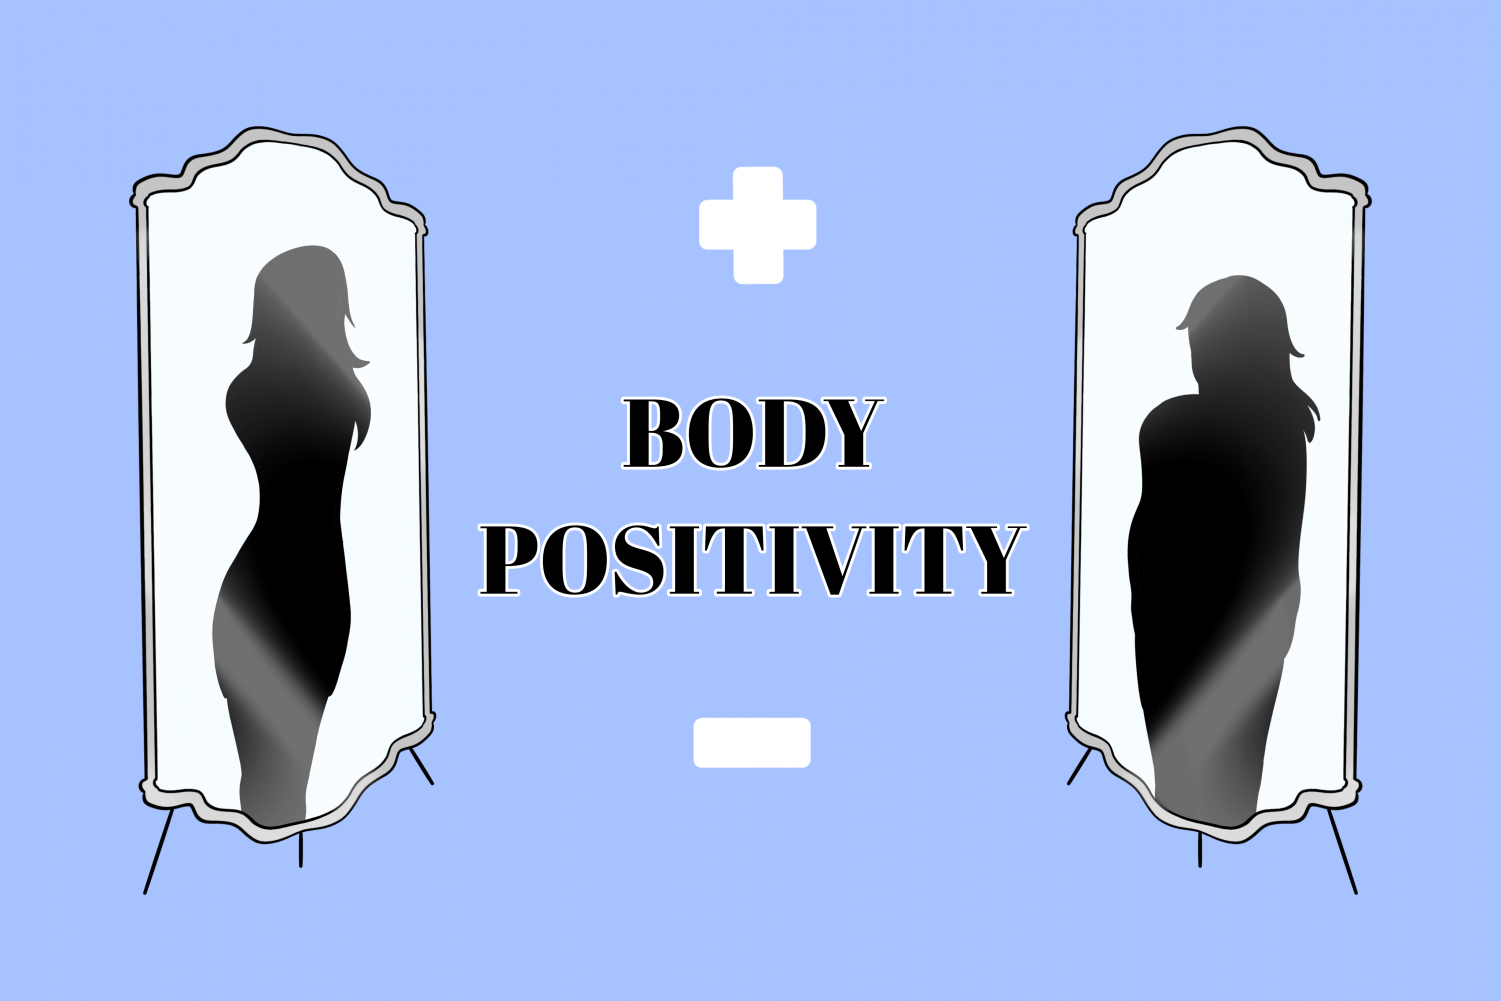 Is The Body Positivity Social Movement Toxic? - UT News